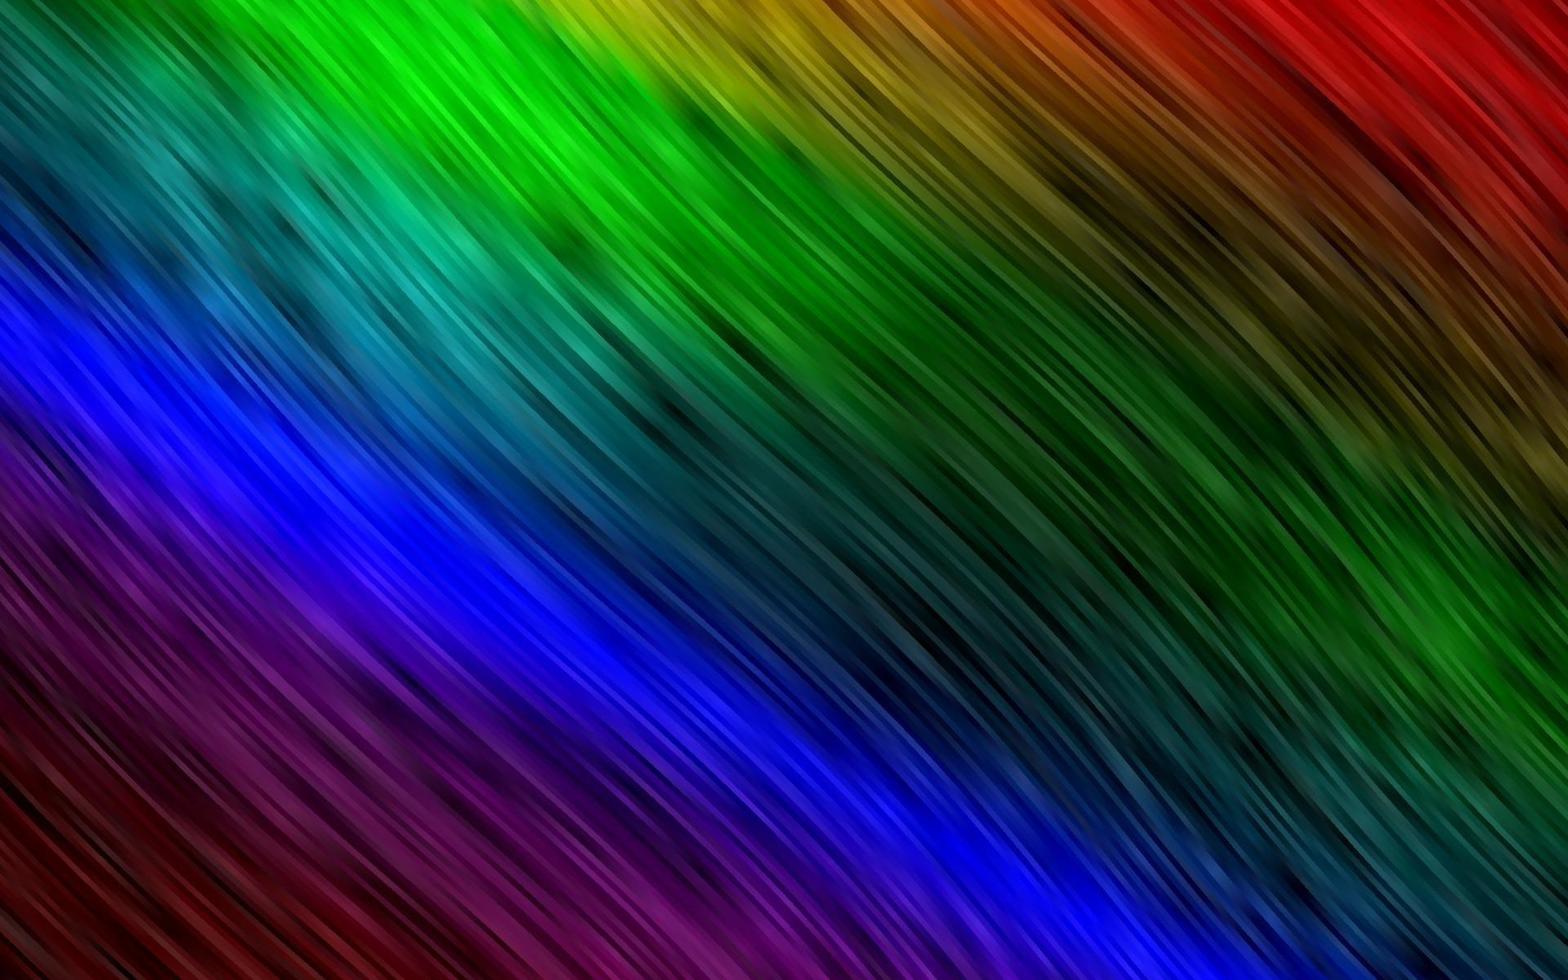 Dark Multicolor, Rainbow vector template with liquid shapes.